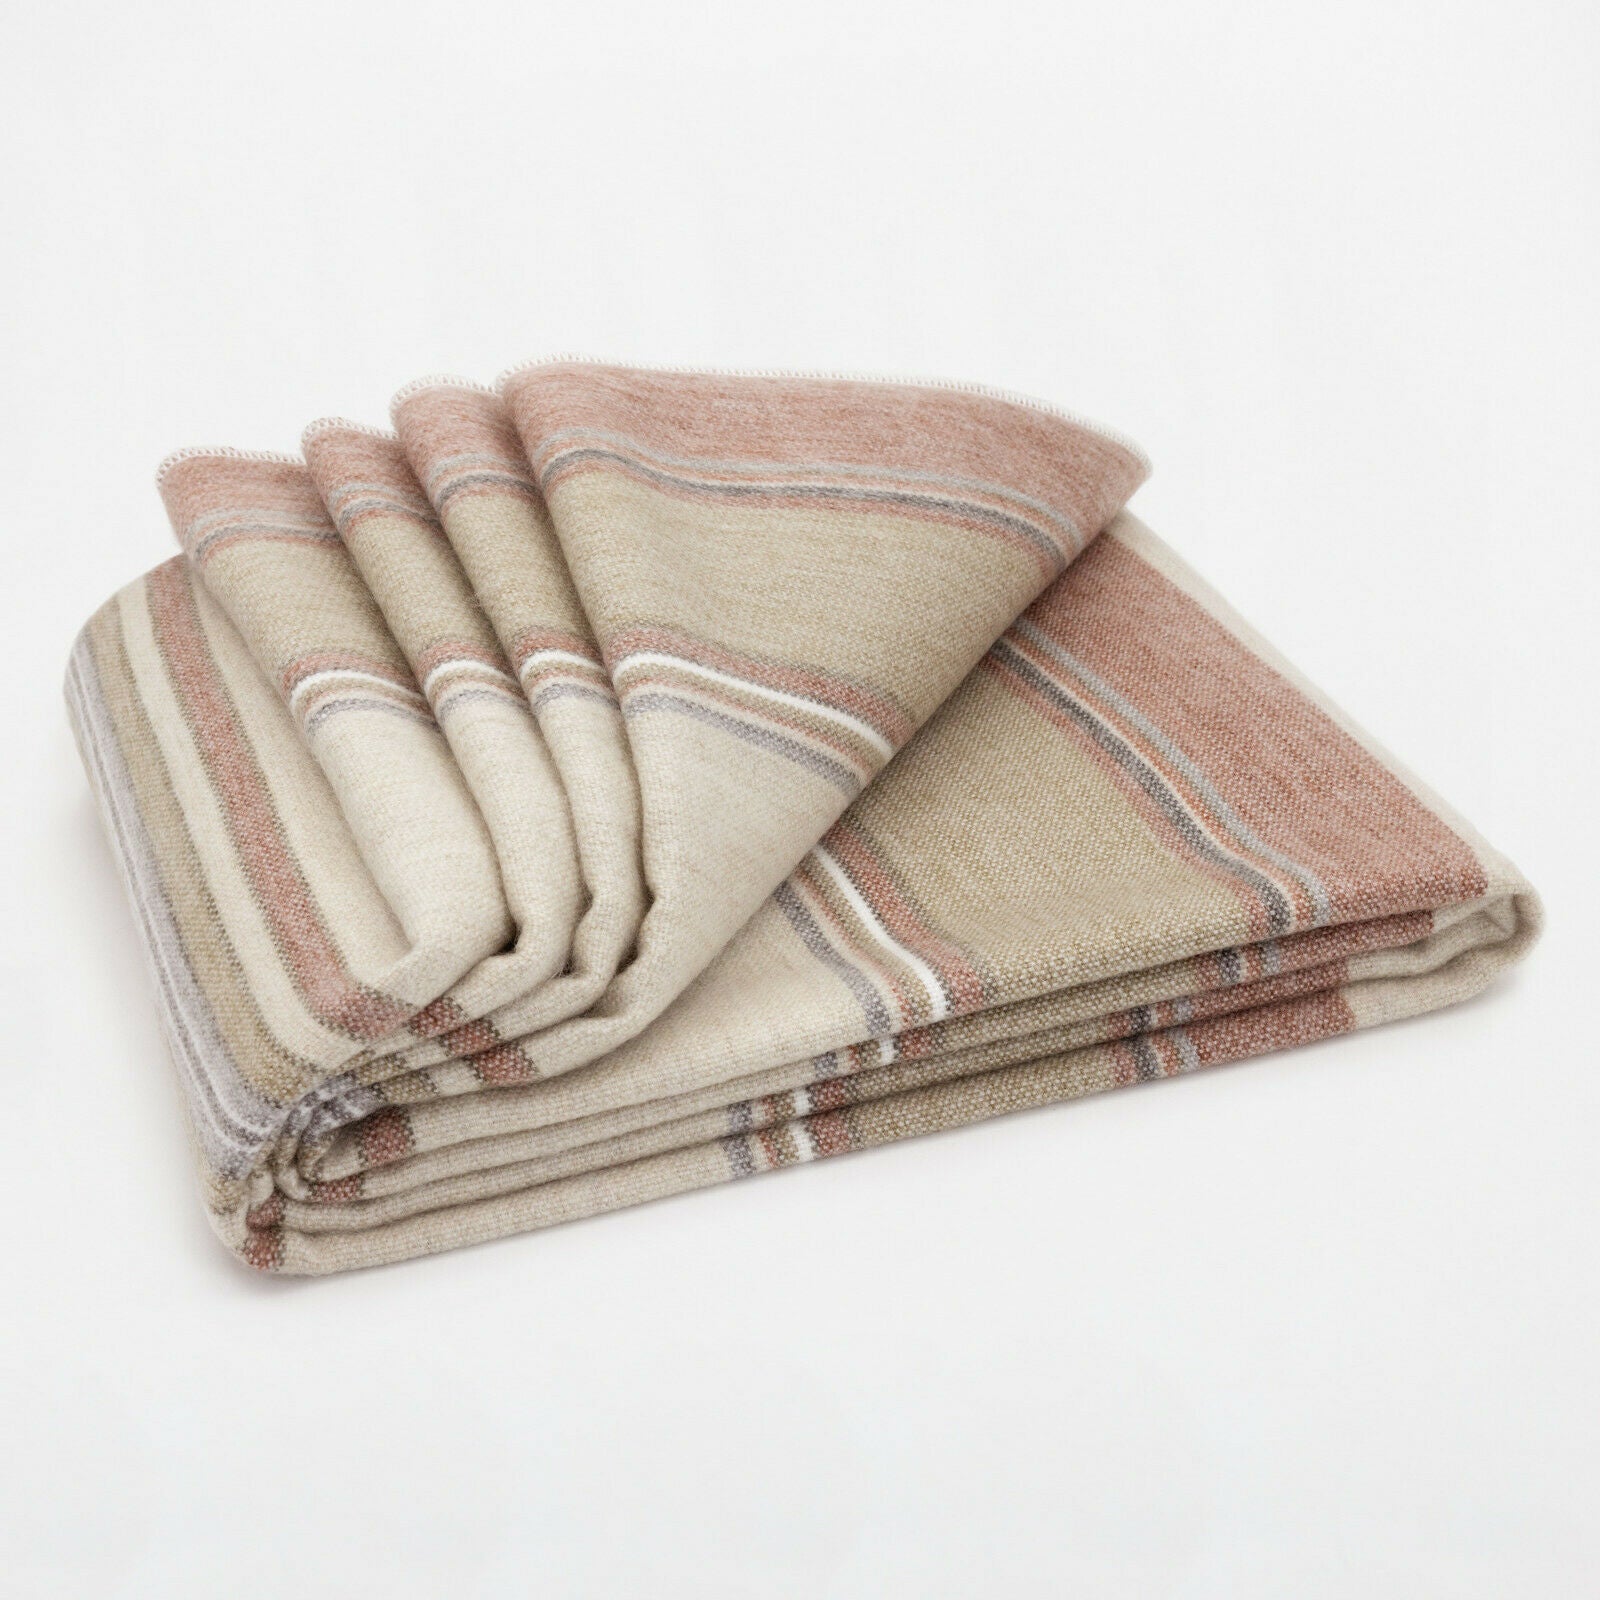 Zhumir - Baby Alpaca Wool Throw Blanket / Sofa Cover - Queen 95" x 66" - earthy stripes pattern